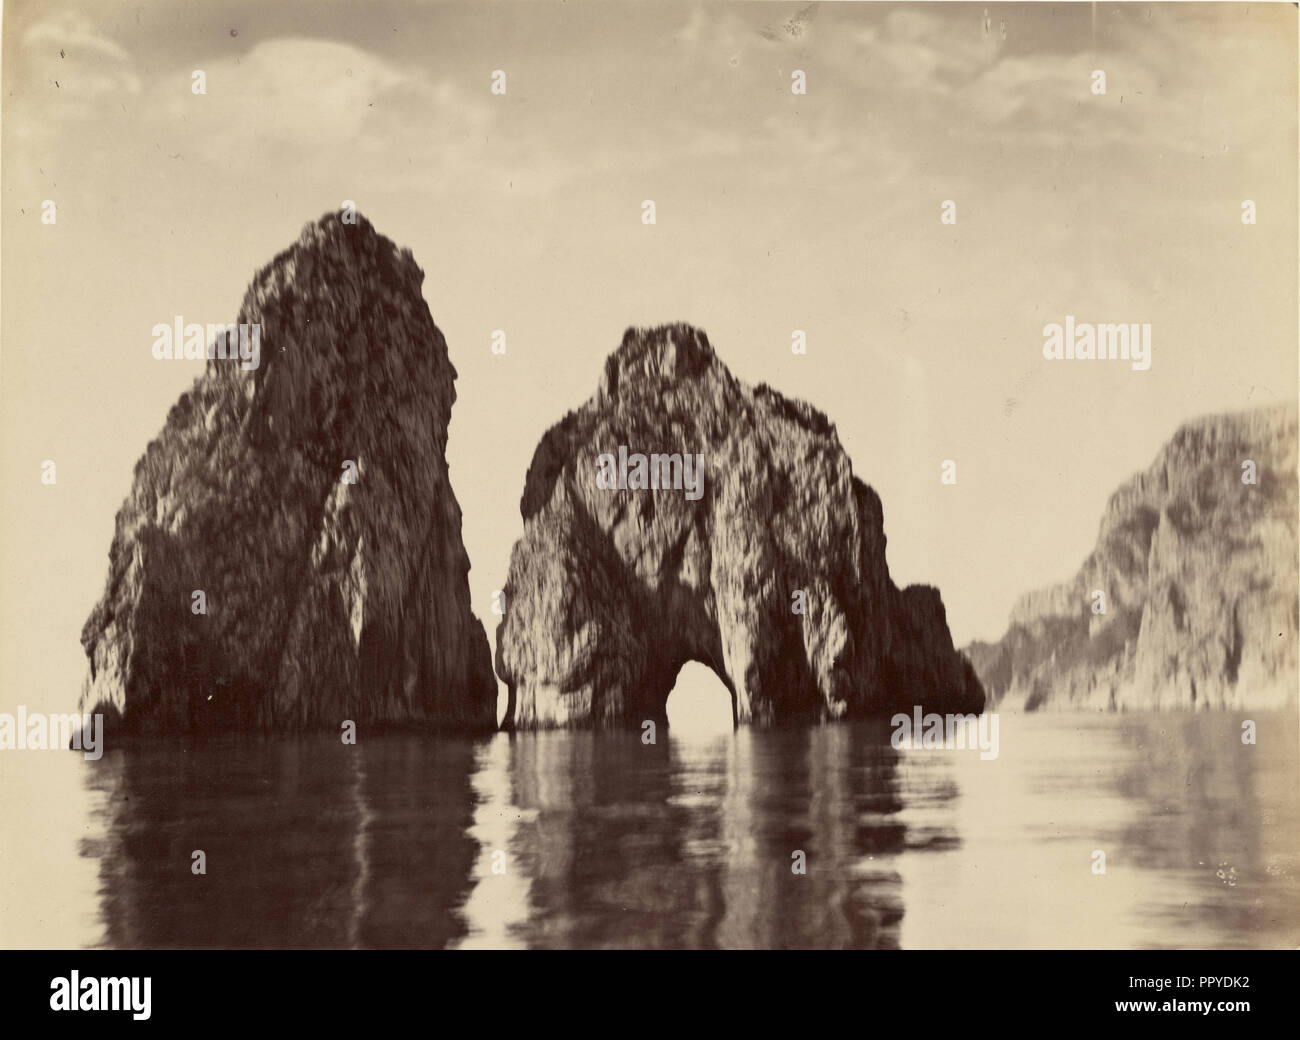 Capri, Rocks by the Sea; James Anderson, British, 1813 - 1877, about 1845 - 1877; Albumen silver print Stock Photo